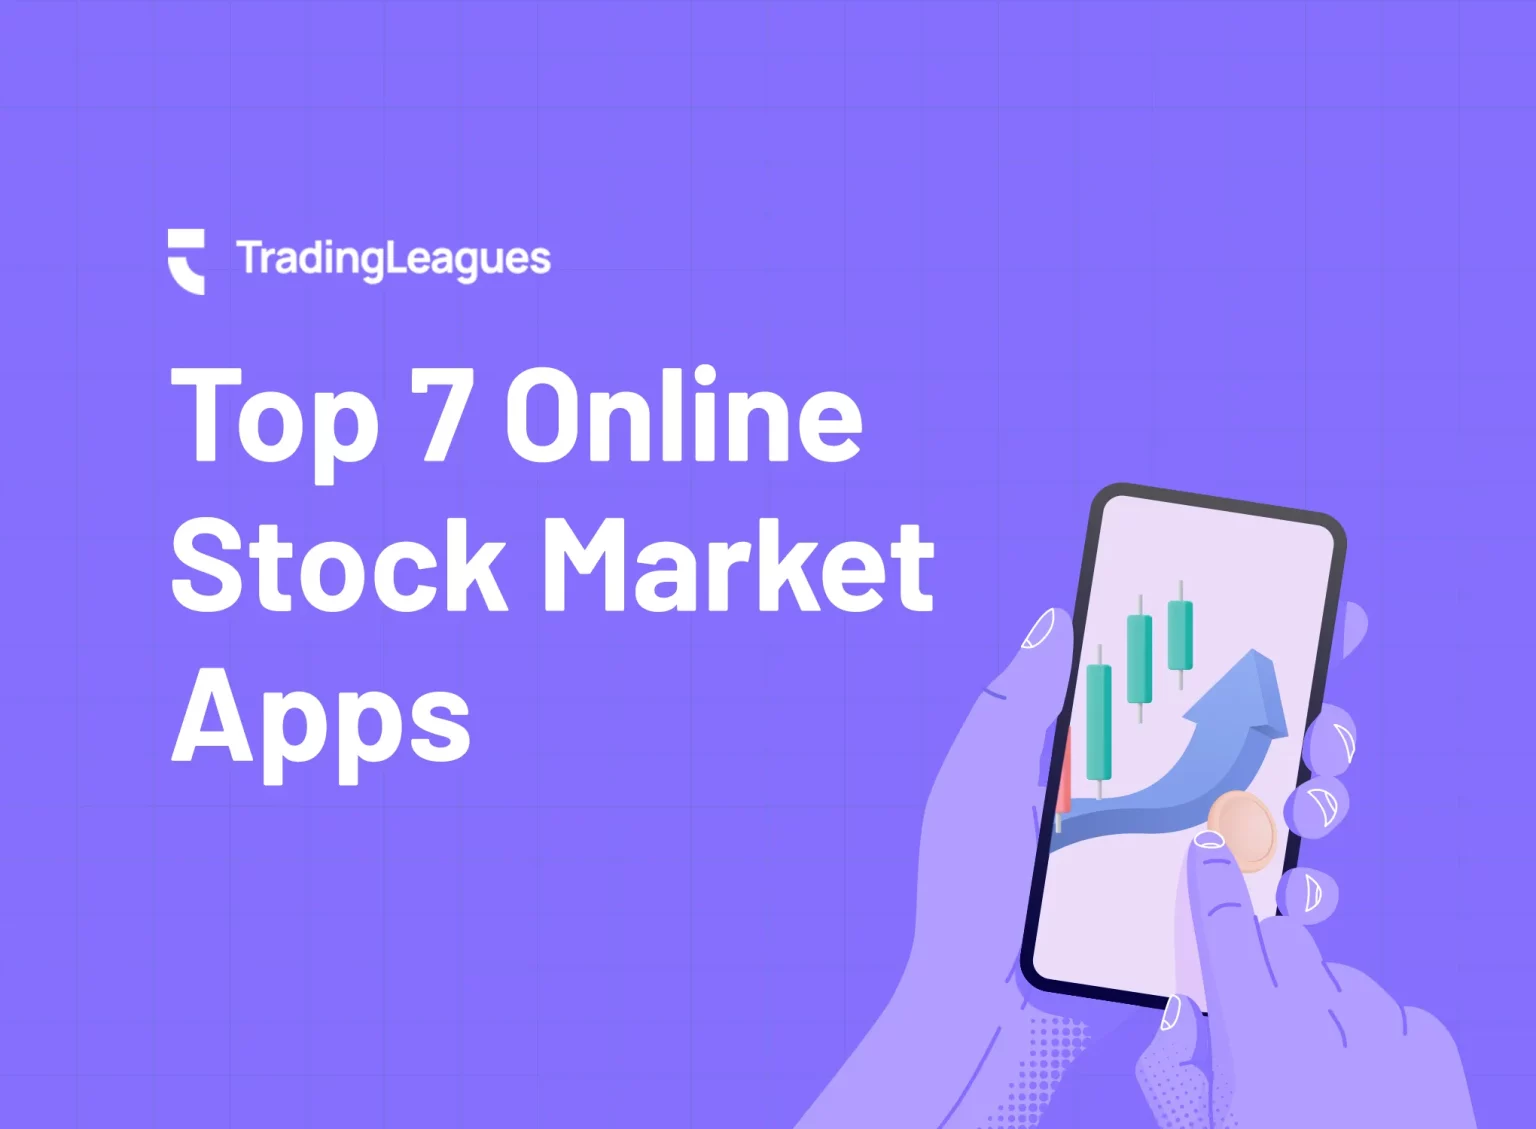 Best trading apps in India: Top 7 online stock market apps